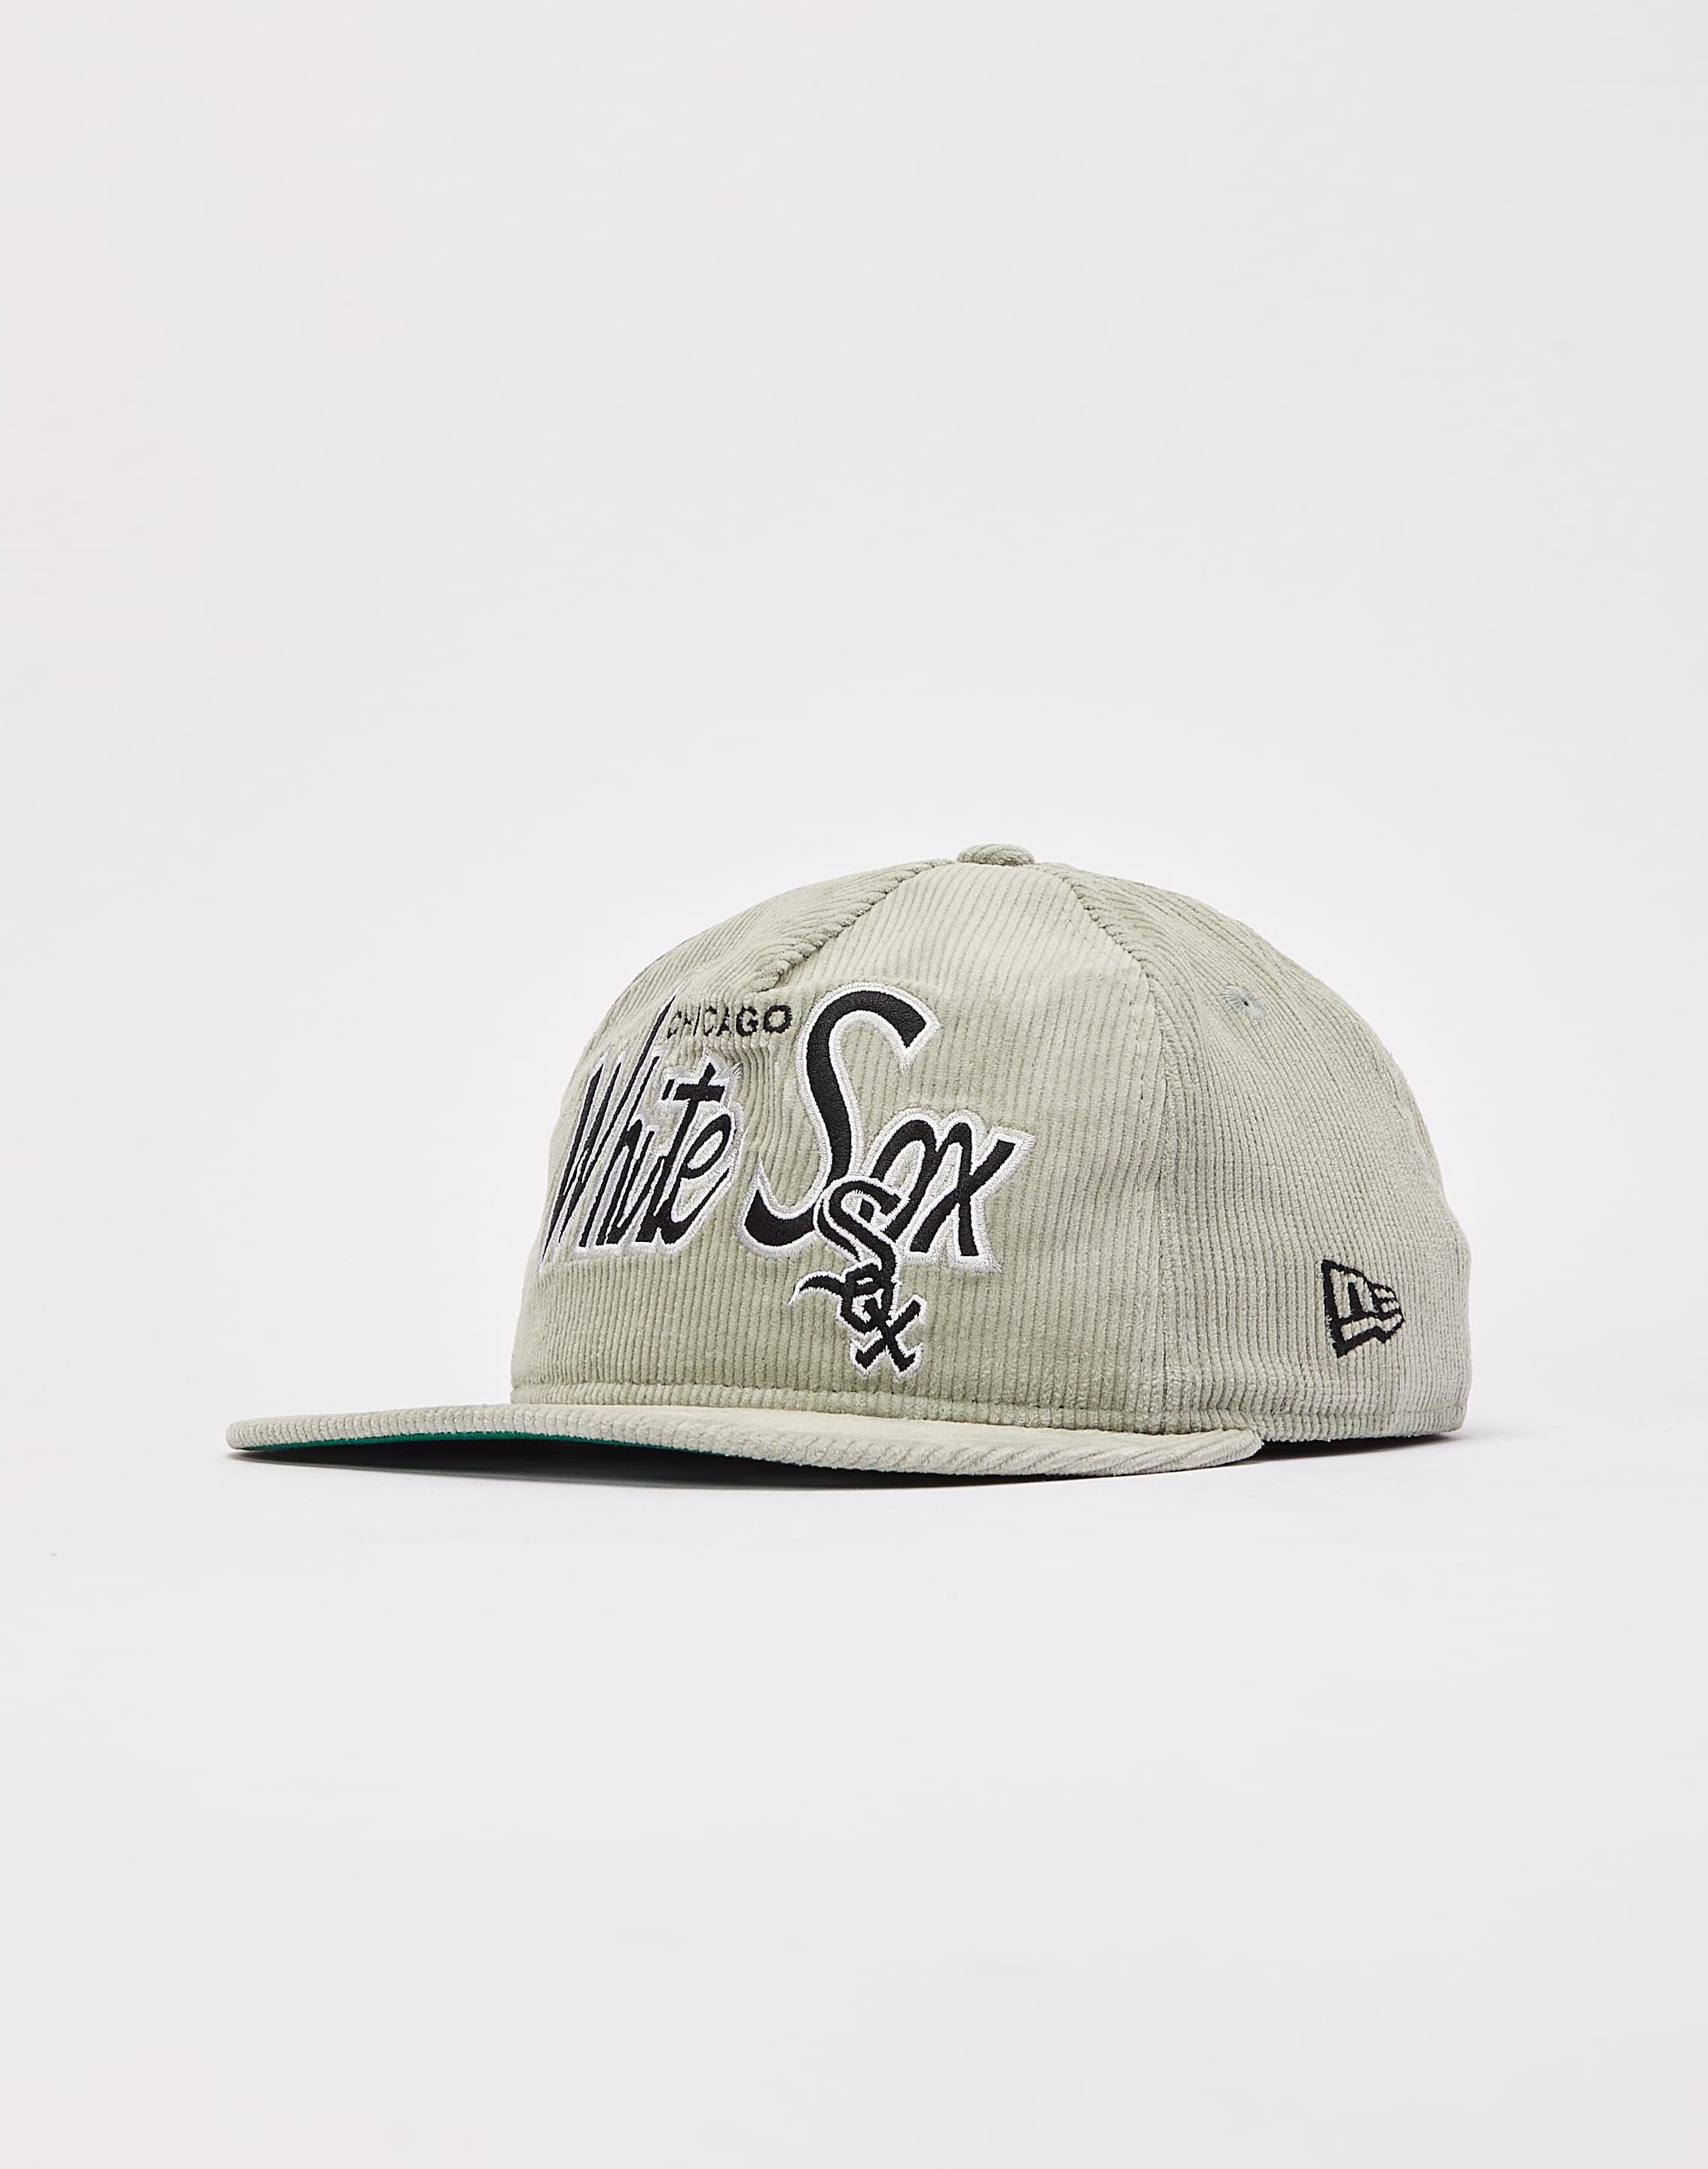 Men's New Era Gray Chicago White Sox Corduroy Golfer Adjustable Hat